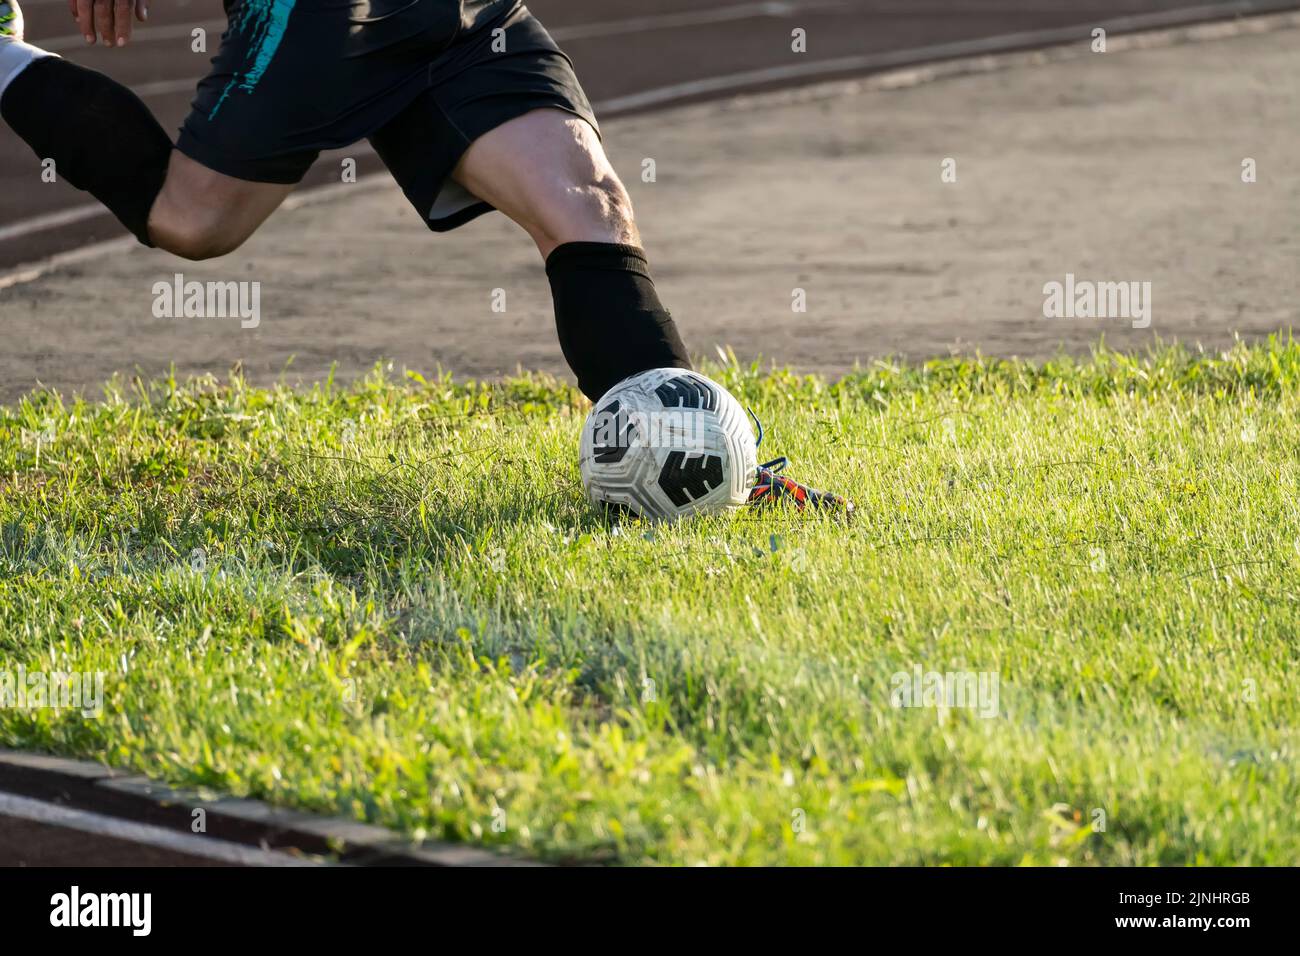 Pie pateando la pelota de fútbol en la hierba verde .patea la pelota. Esquina en el fútbol Foto de stock